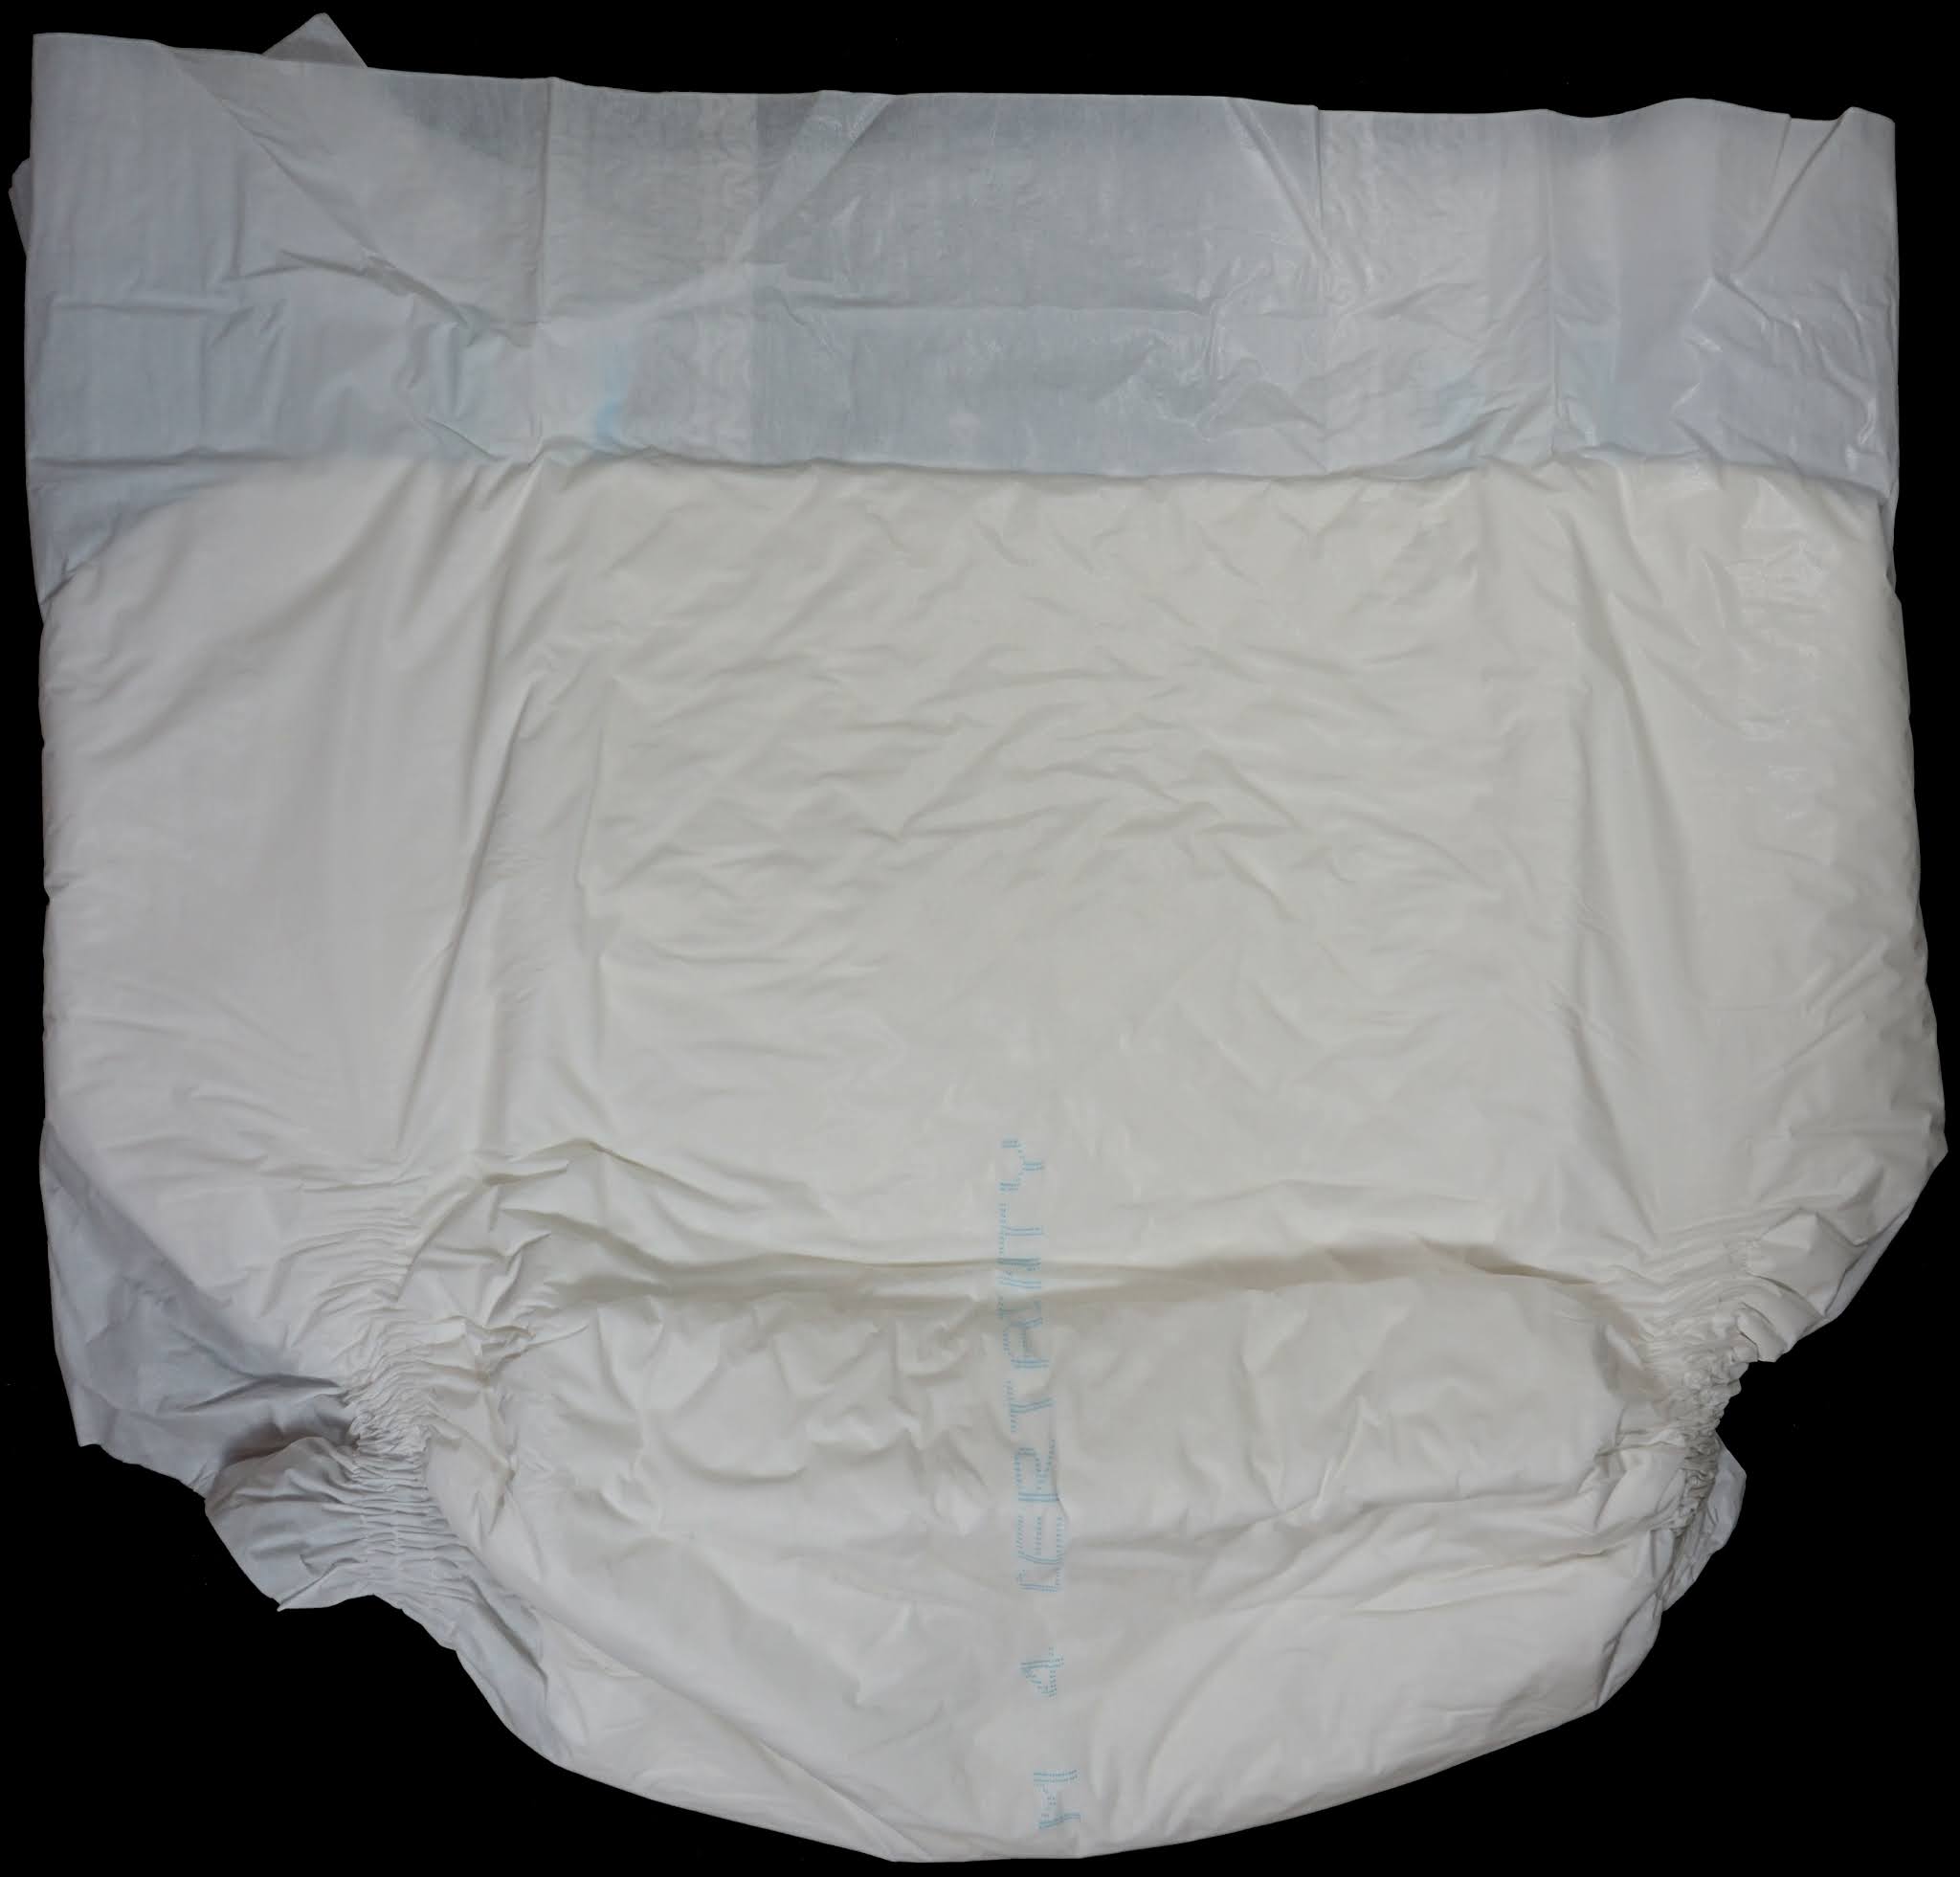 Diaper Metrics: Certainty Adult Diapers Review